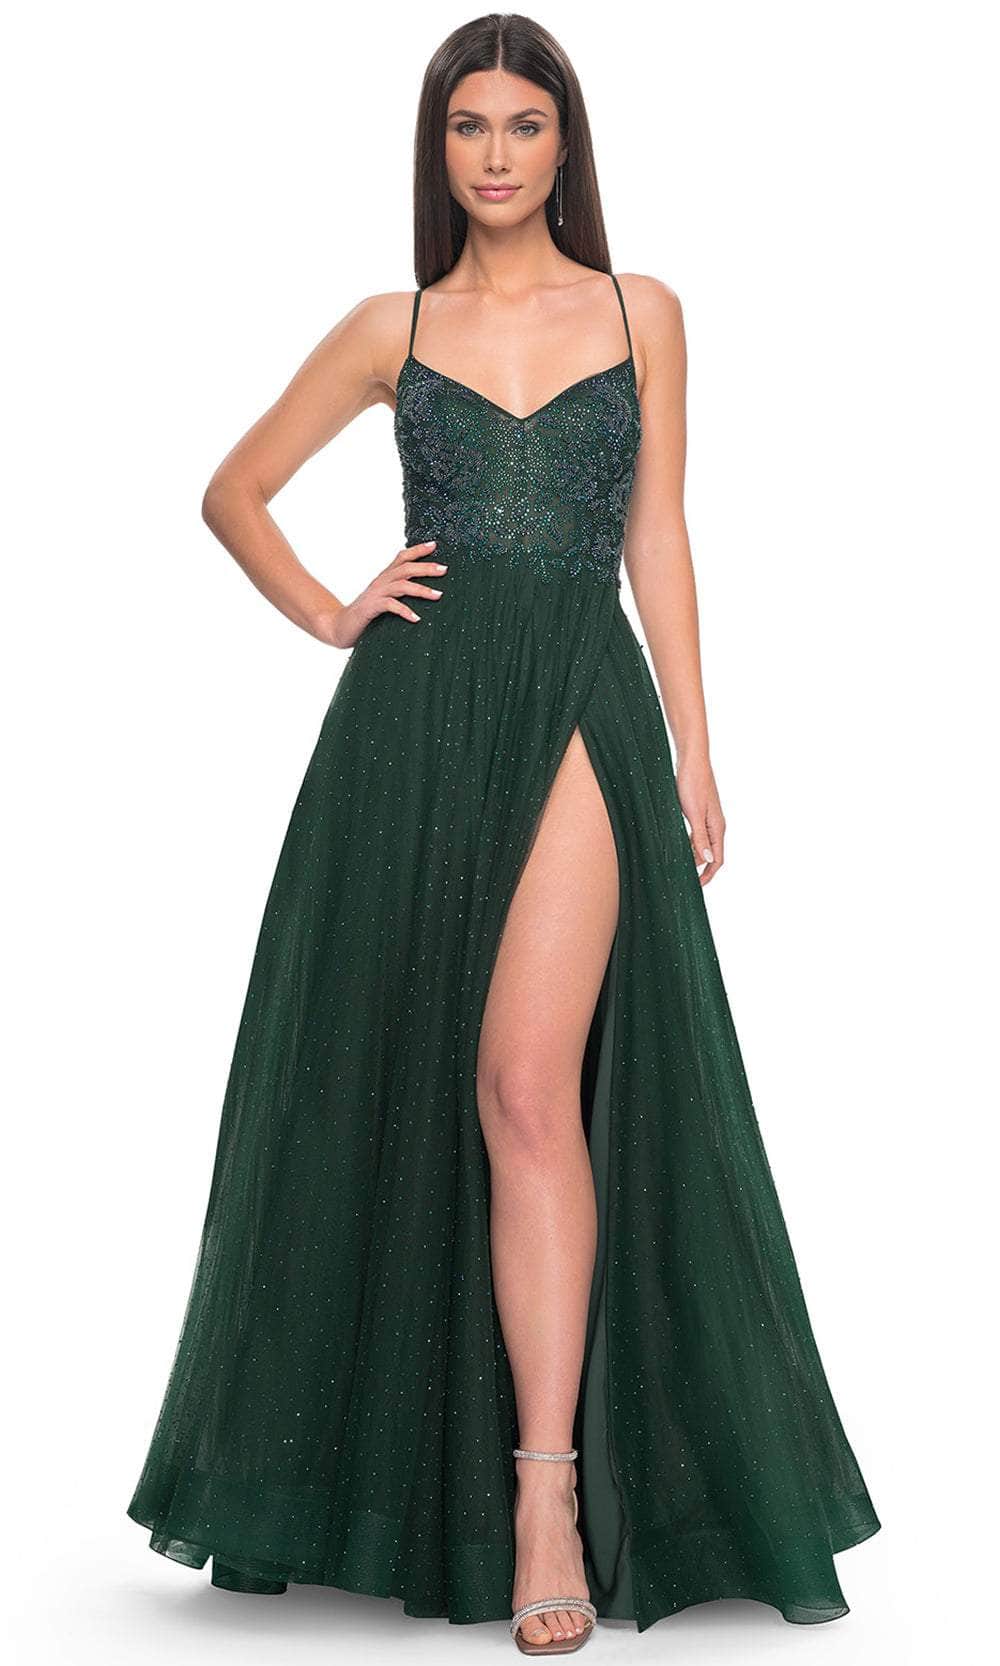 Image of La Femme 32020 - Beaded Illusion Prom Dress